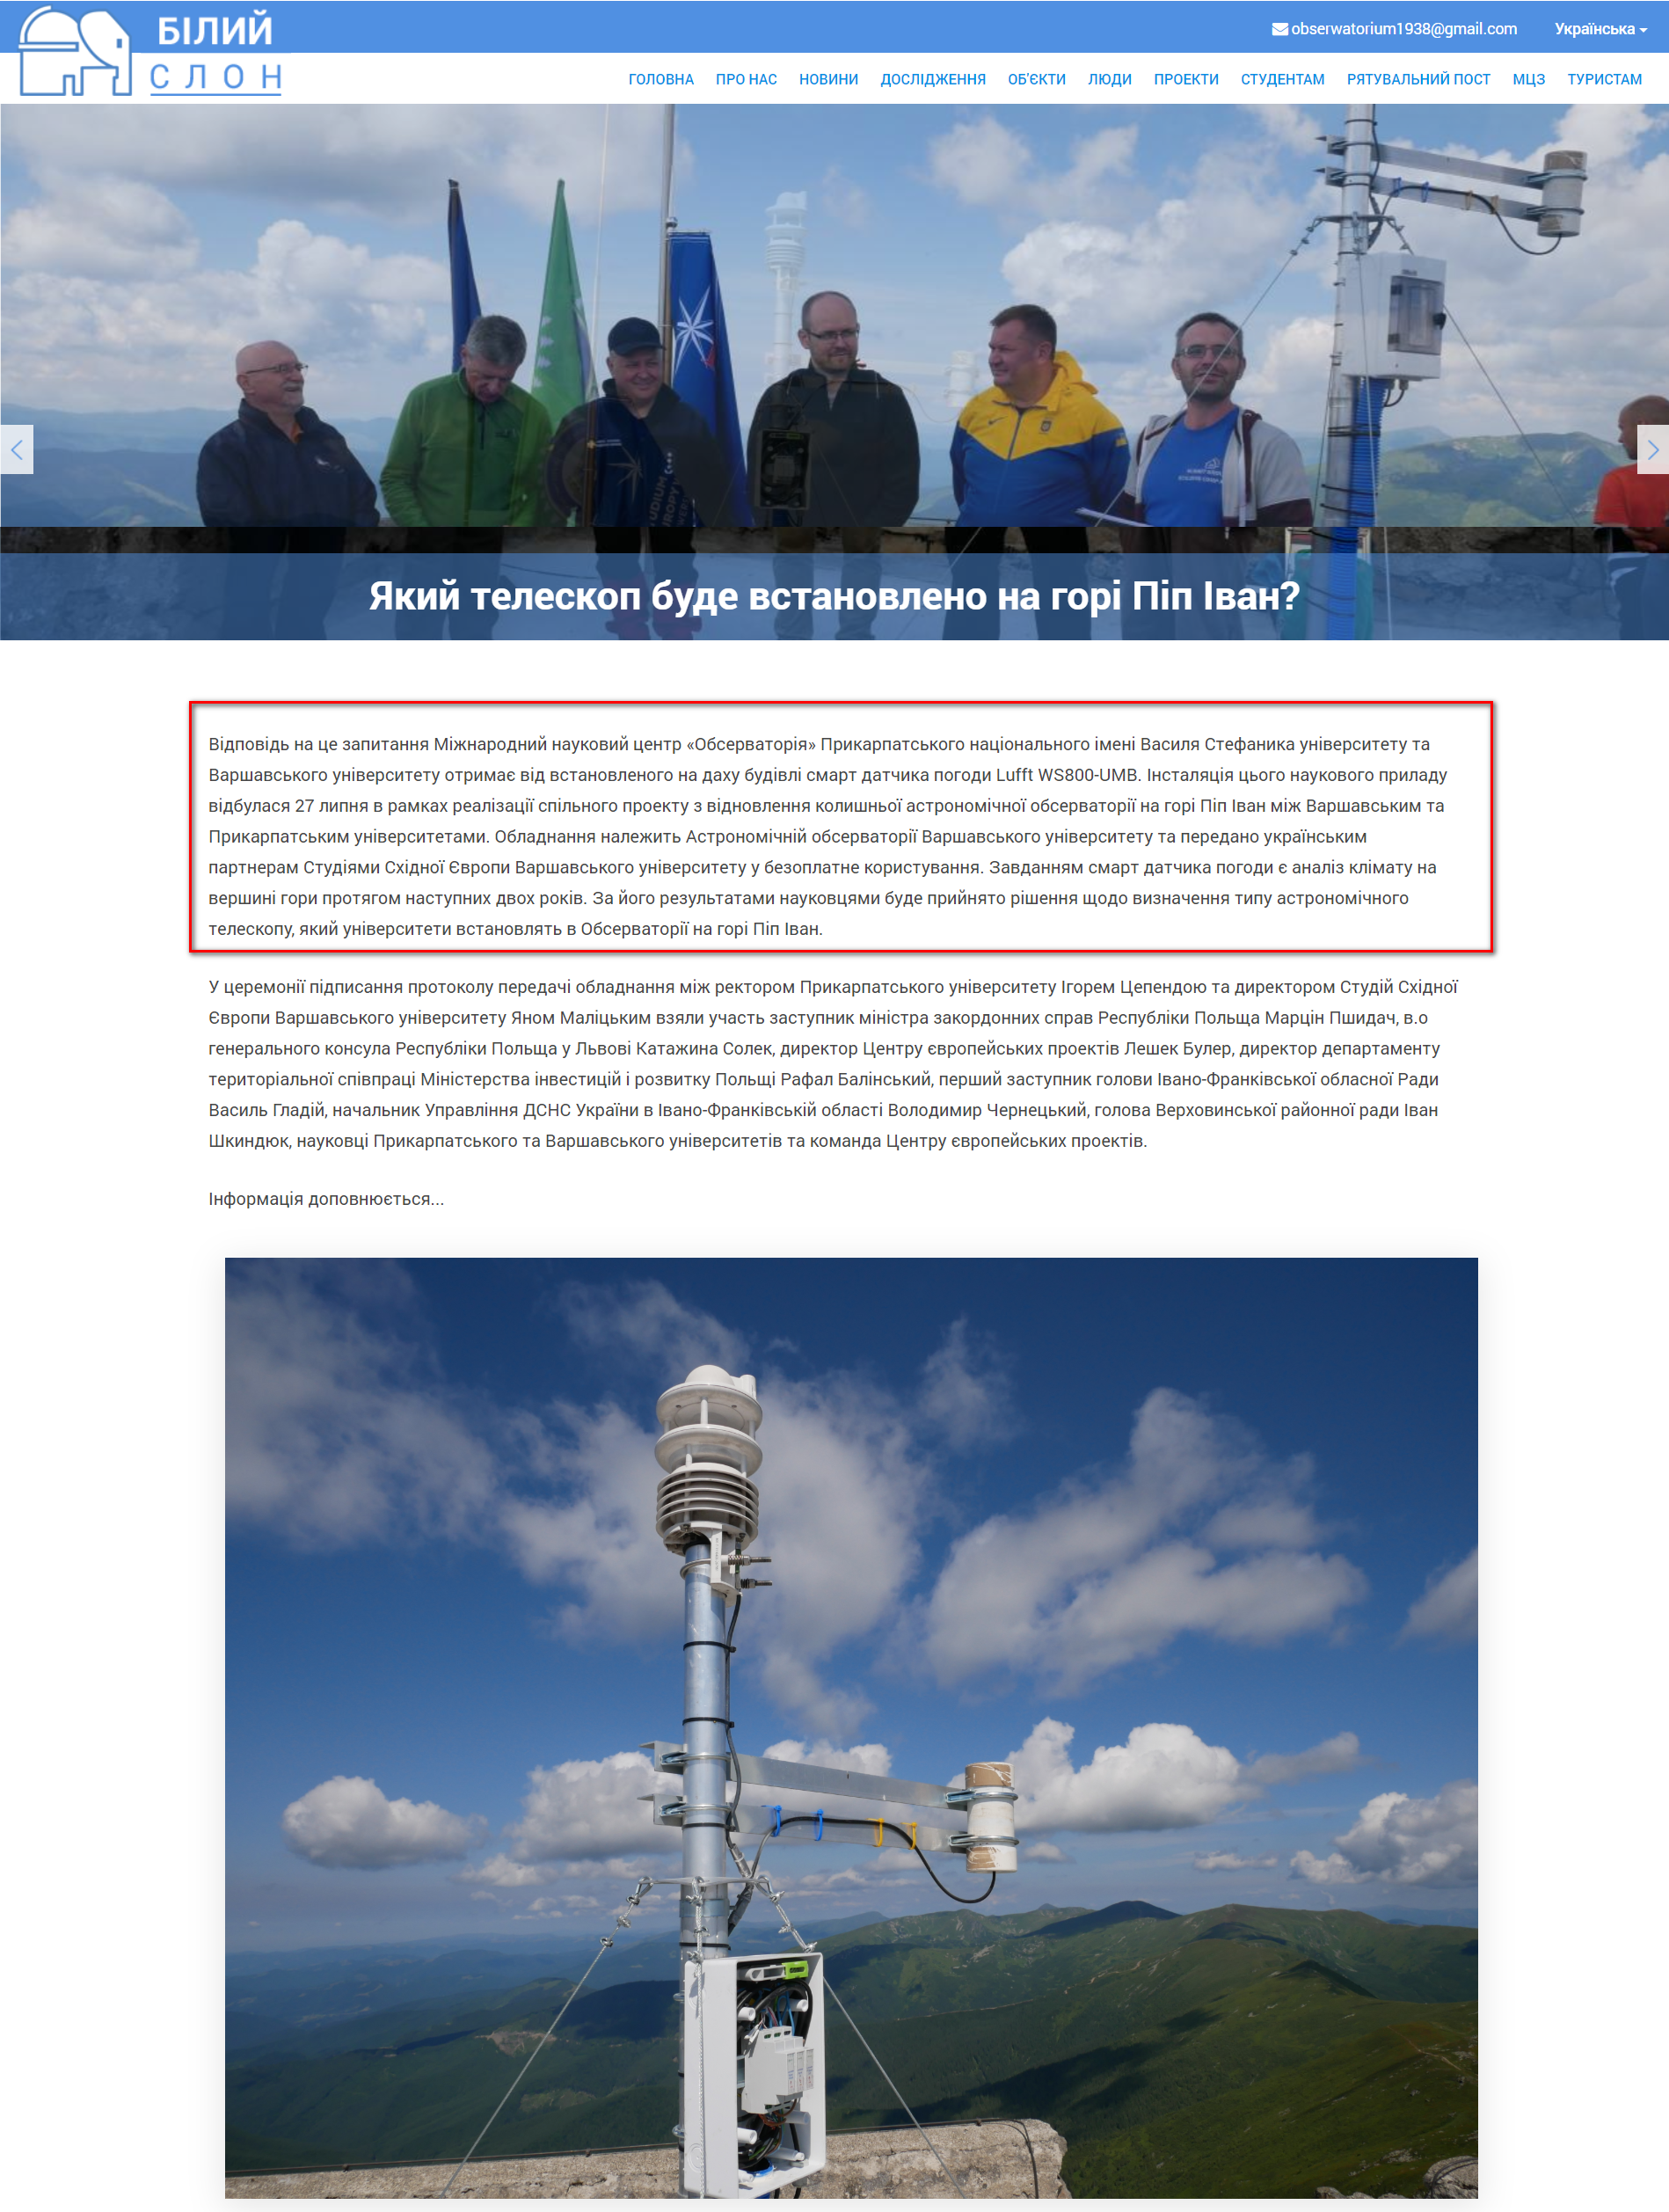 http://observatorium.pnu.edu.ua/post/yakii-teleskop-bude-vstanovleno-na-gori-pip-ivan